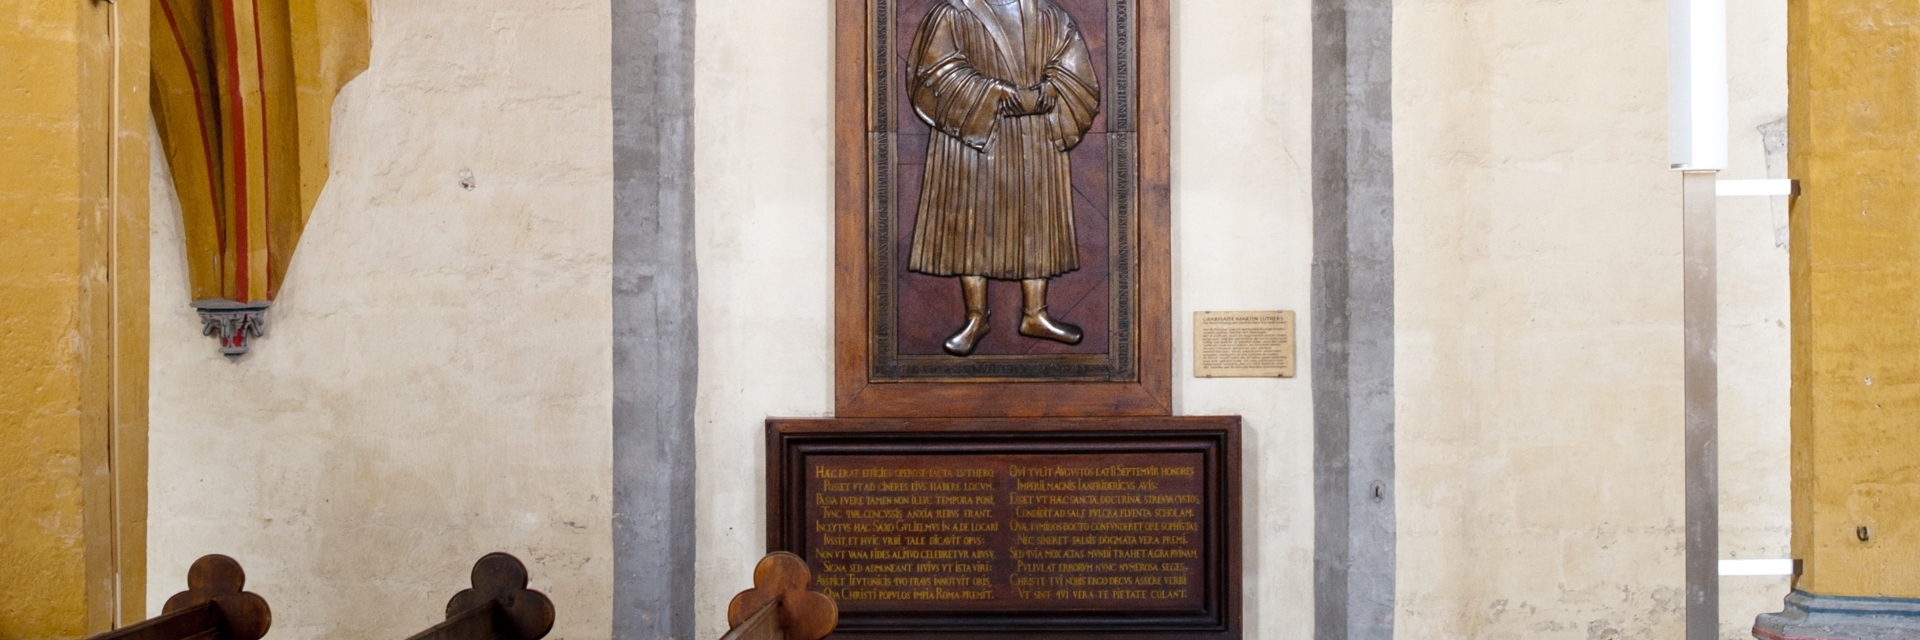 Martin Luther und die Reformation in Jena / Grabplatte © JenaKultur, Foto: Andreas Hub